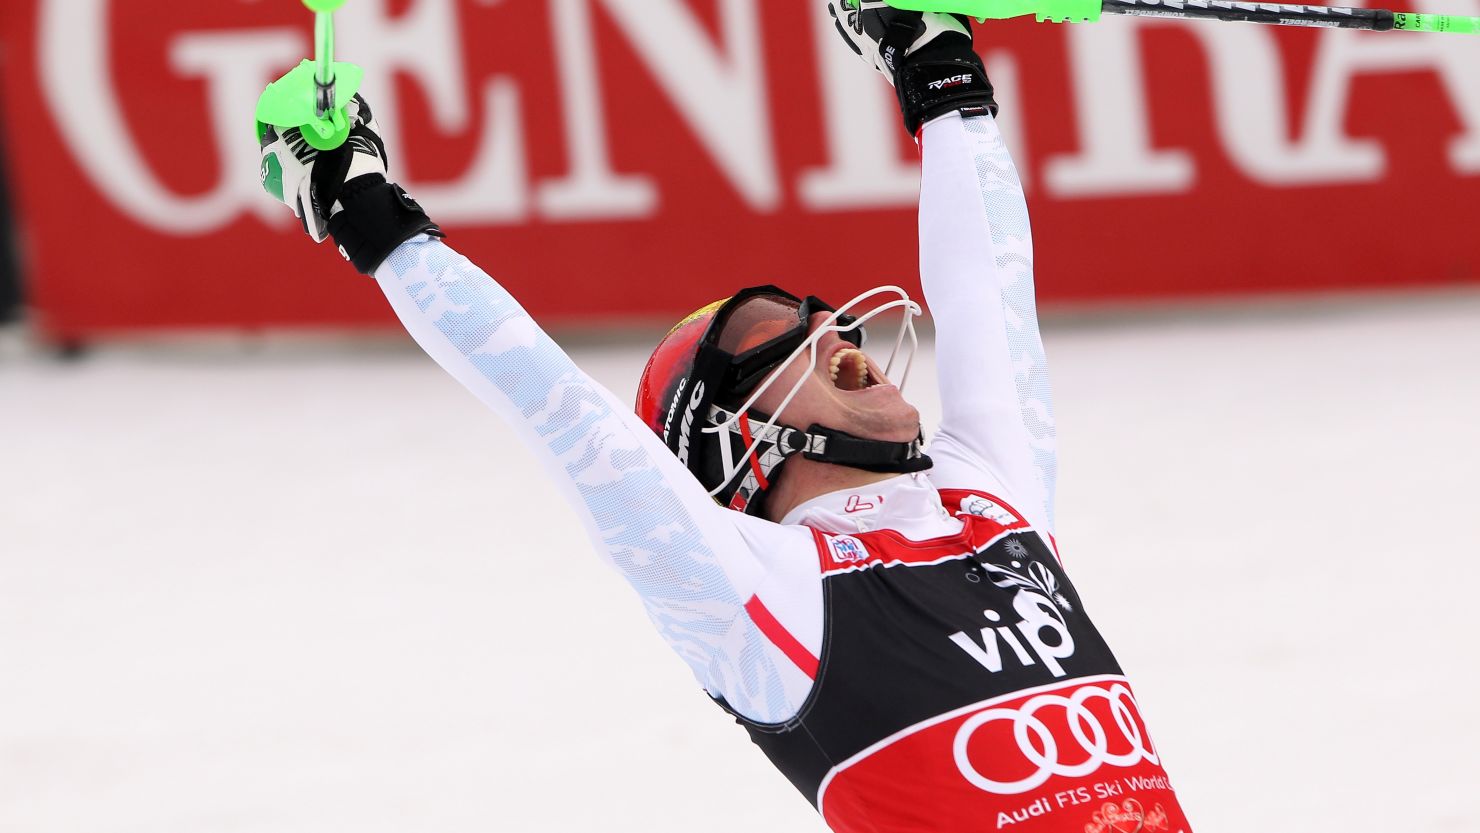 Marcel Hirscher celebrates after winning the giant slalom in Zagreb, Croatia.